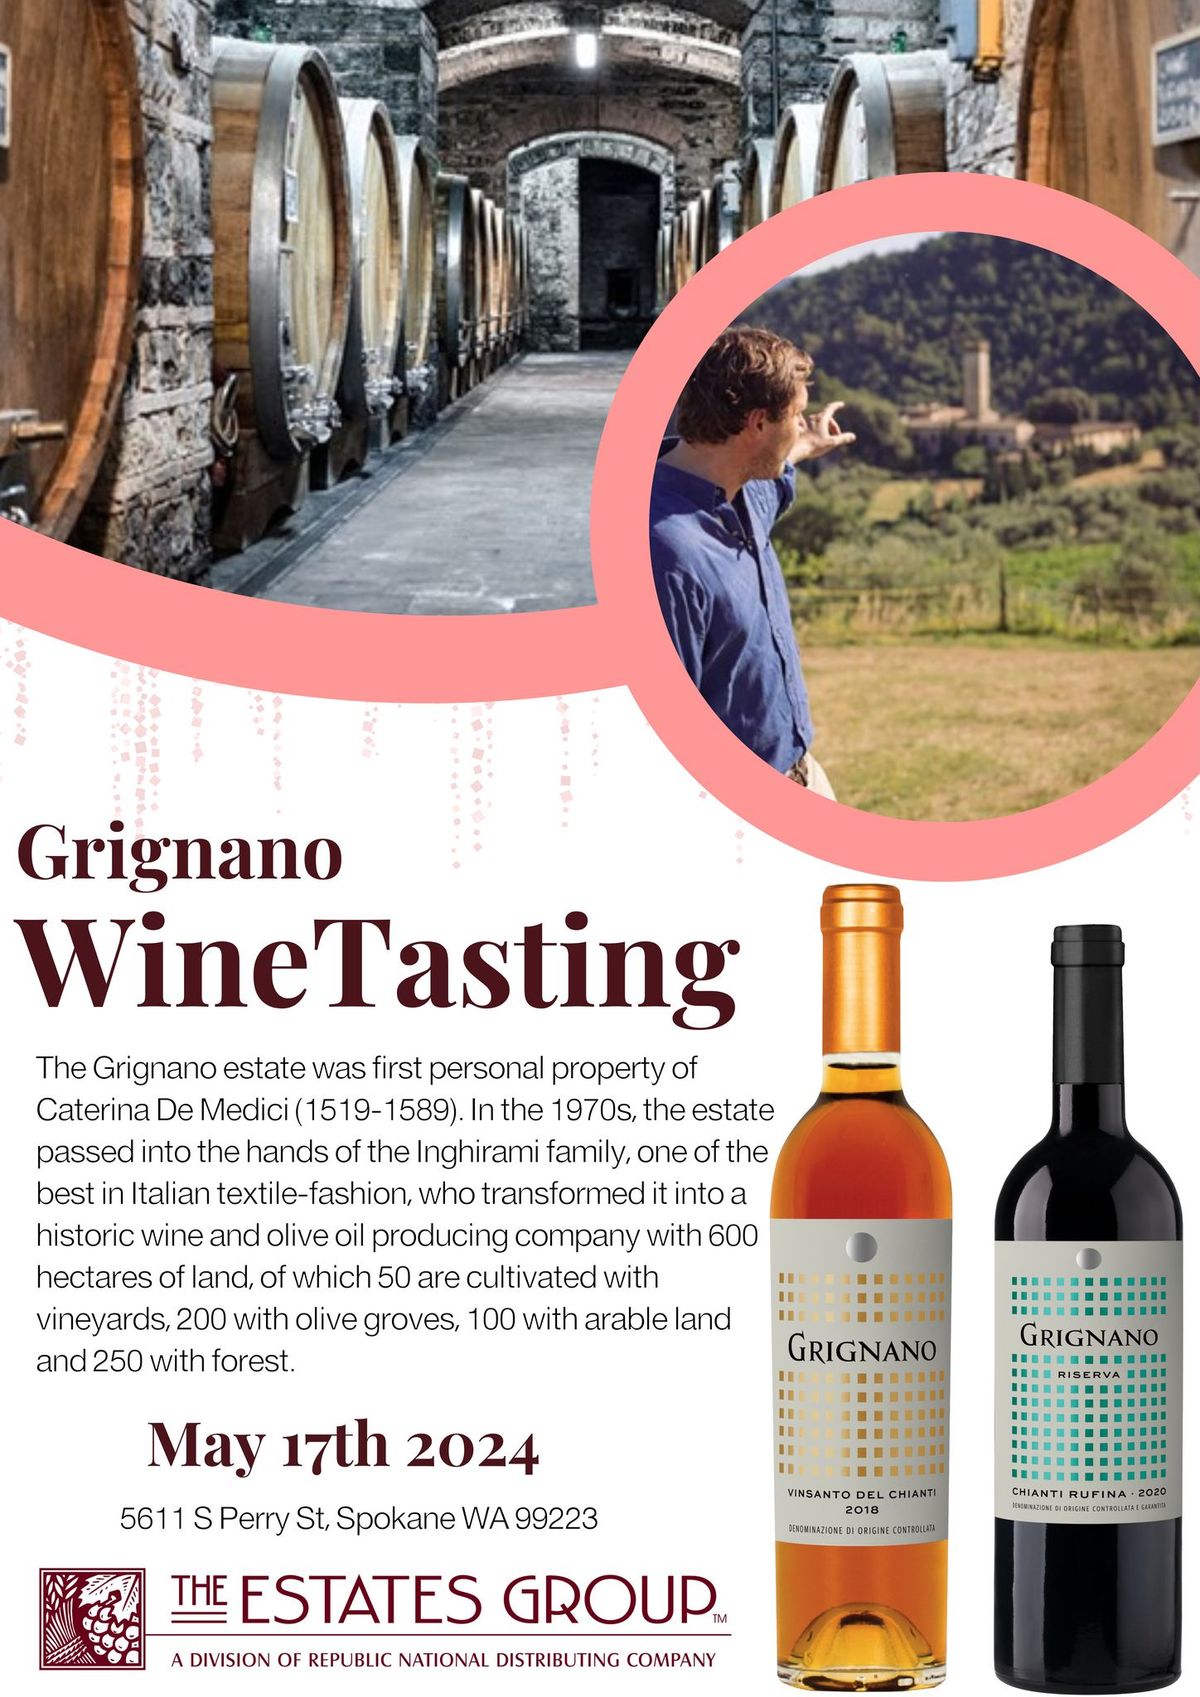 Grignano's Wine Event @ Egger's Liquor Store